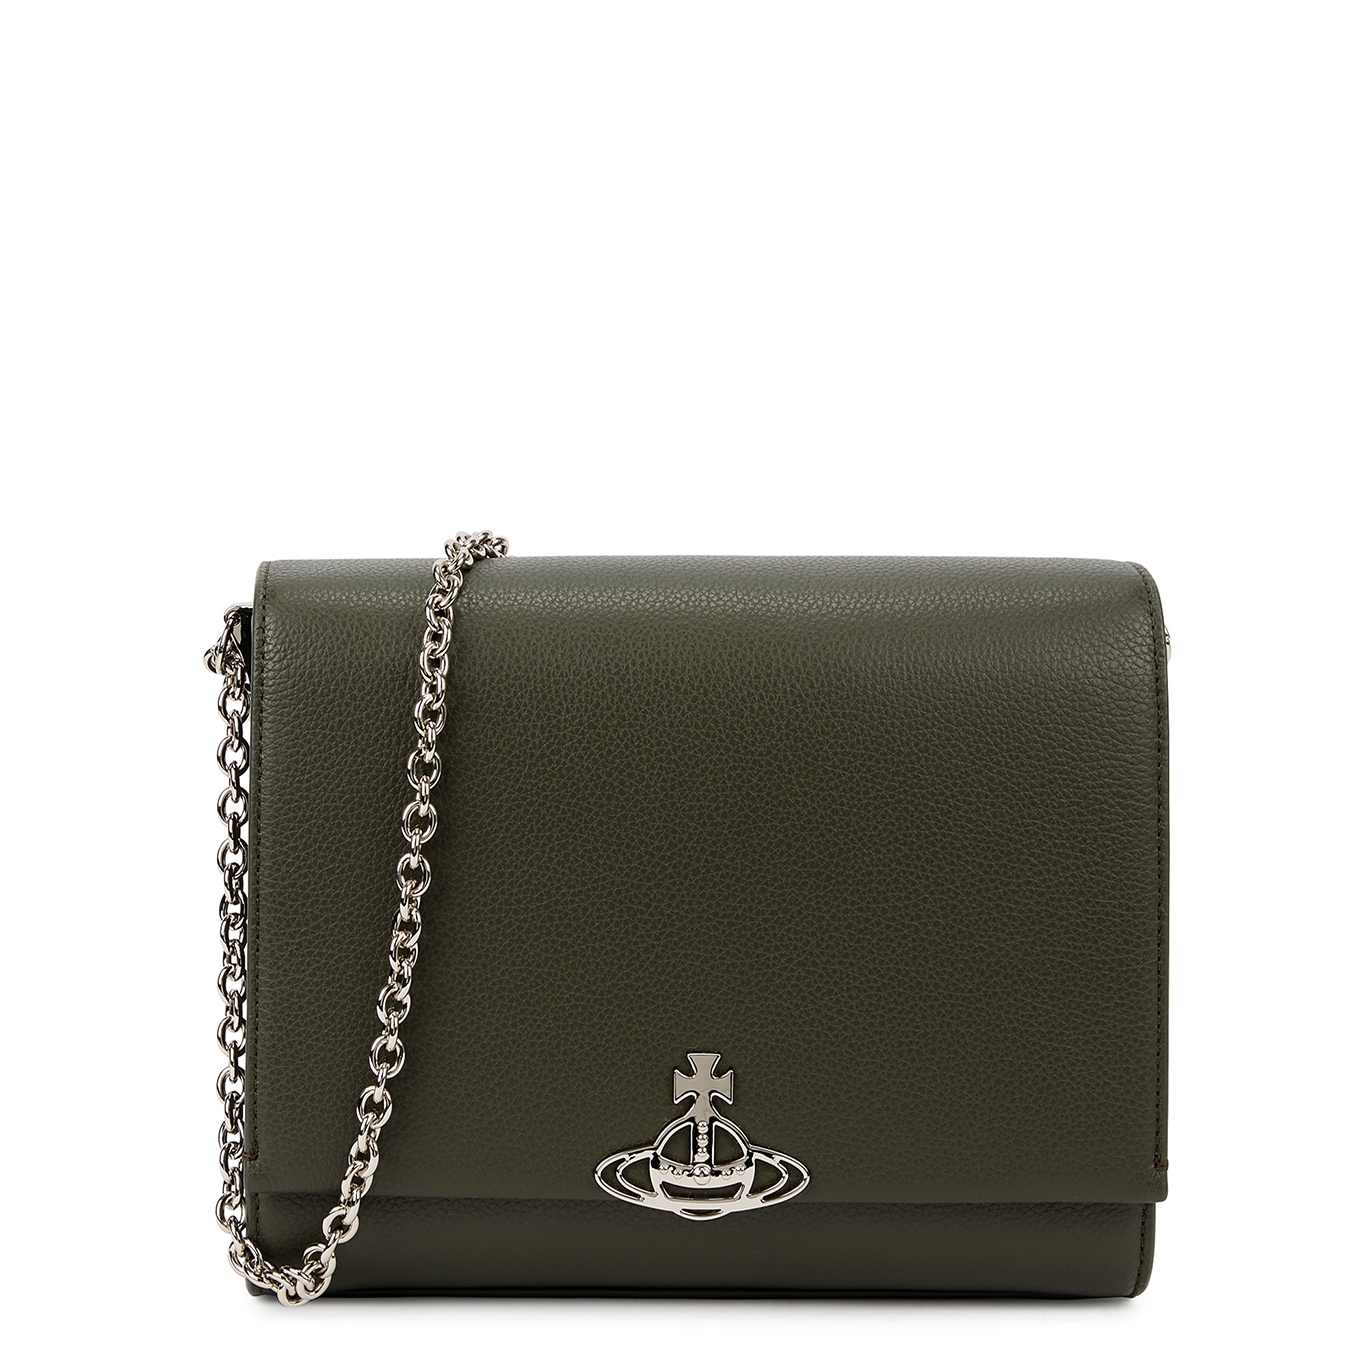 Vivienne Westwood Lucy Medium Green Leather Cross-body Bag